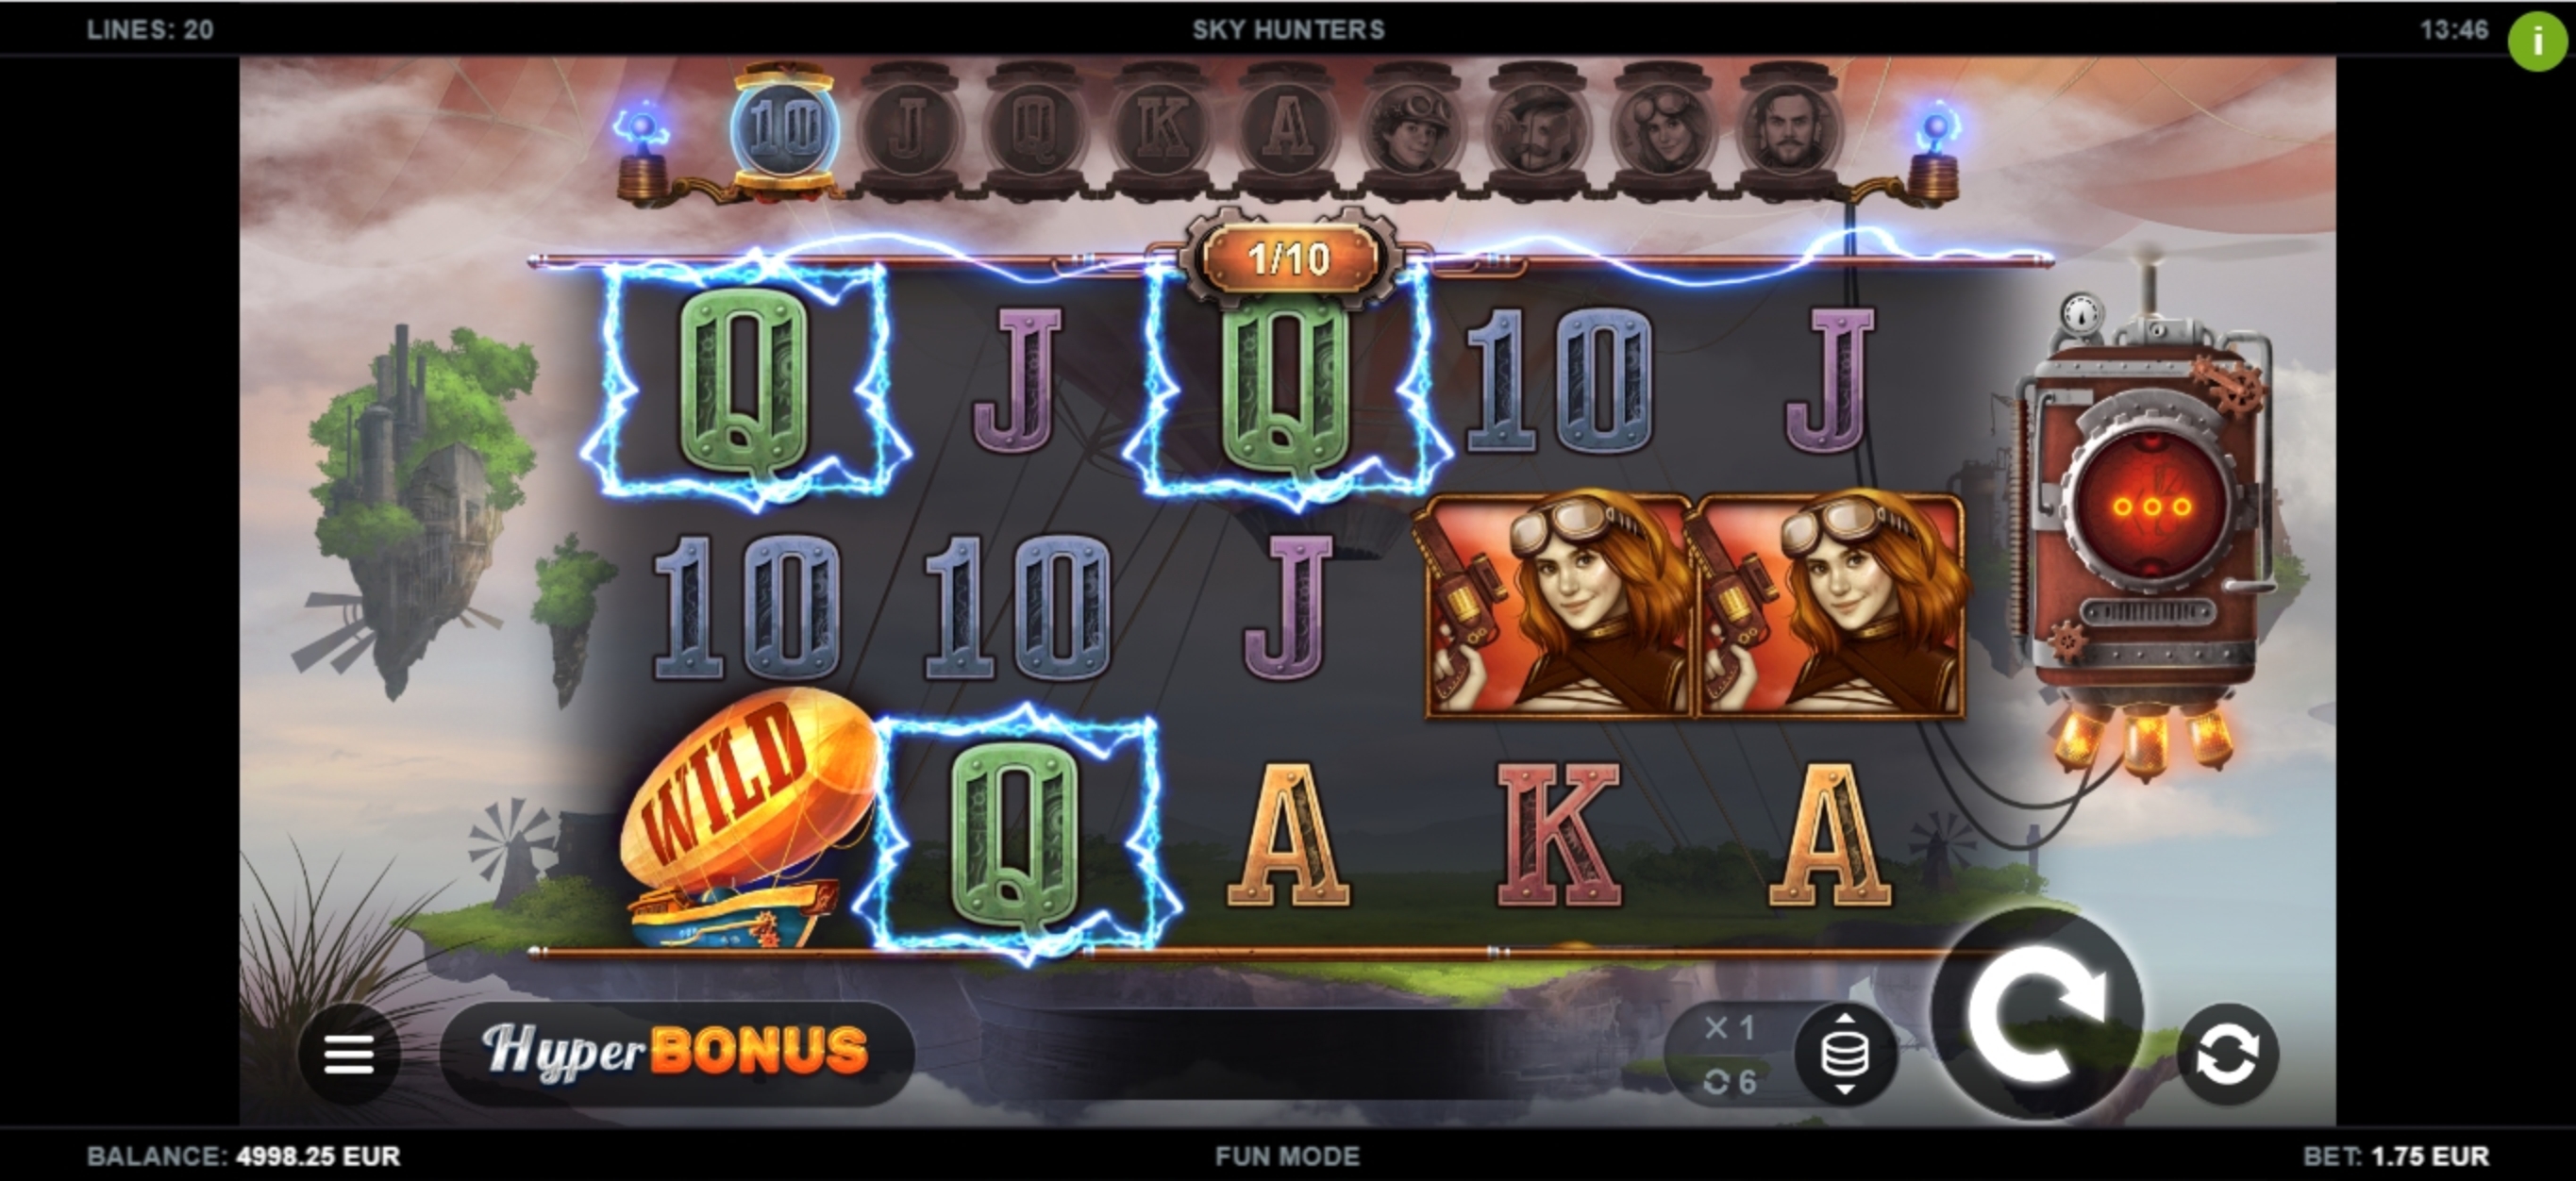 Win Money in Sky Hunters Free Slot Game by Kalamba Games